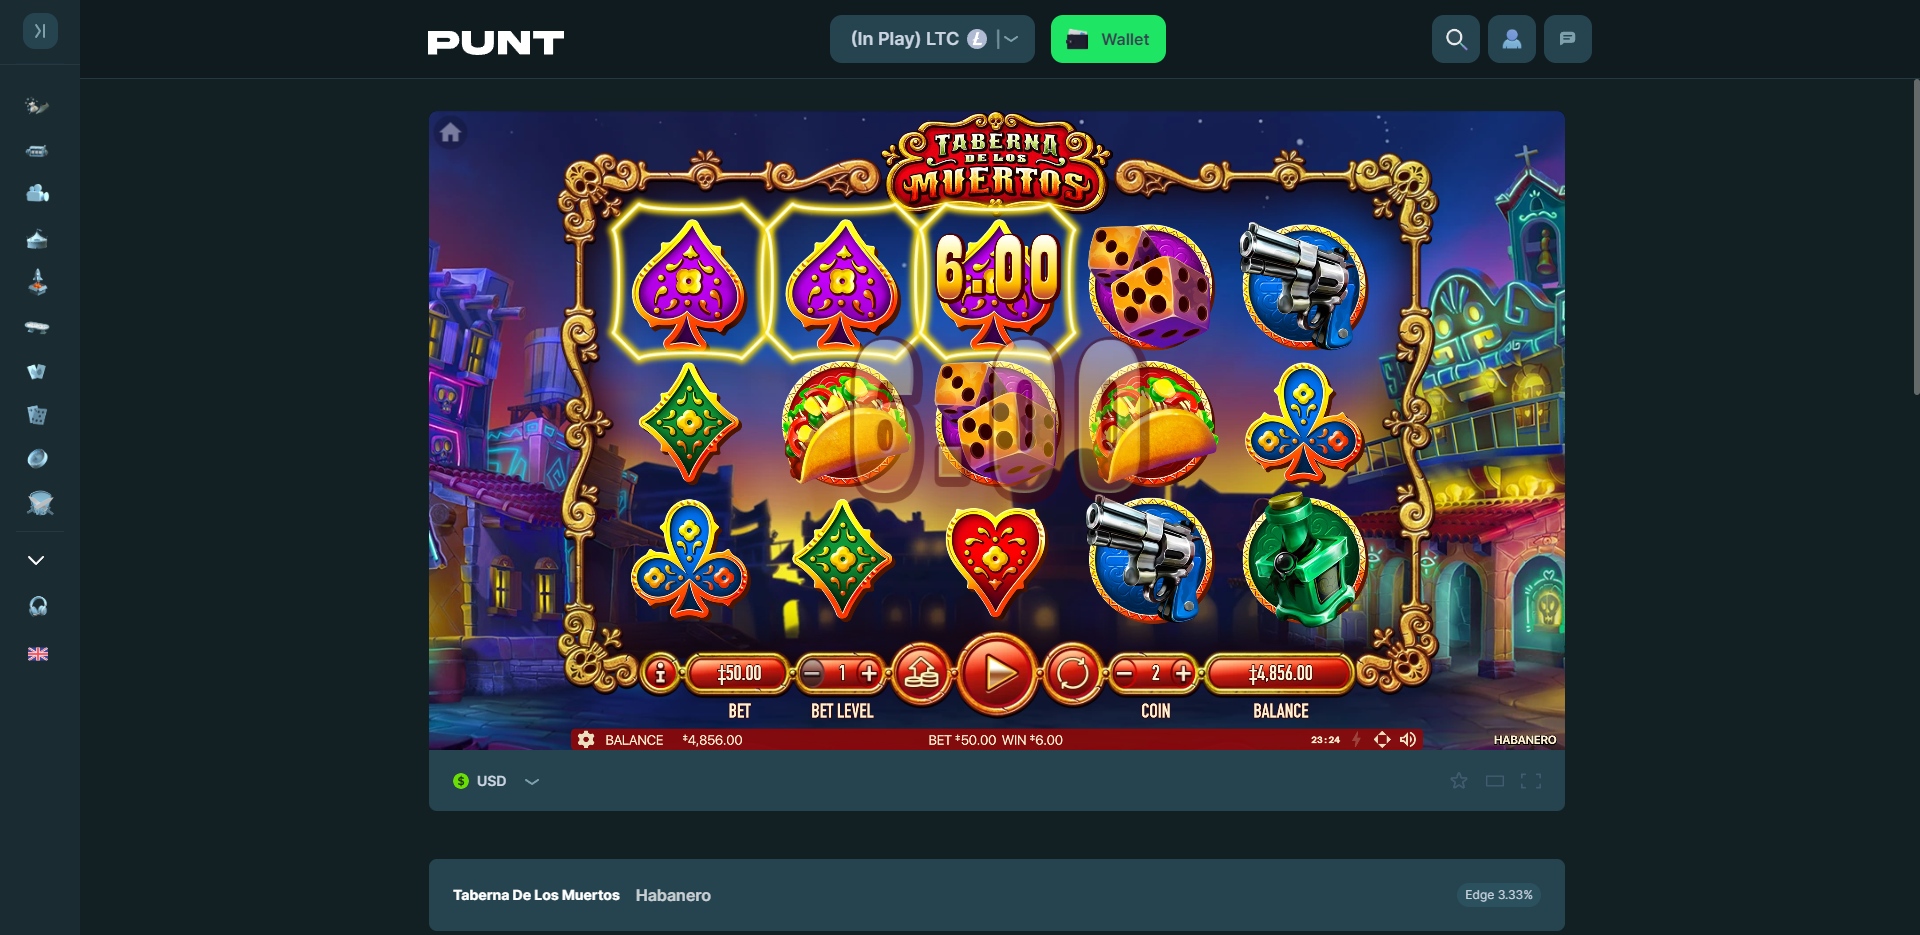 Punt.com Slots Game Theatre Mode